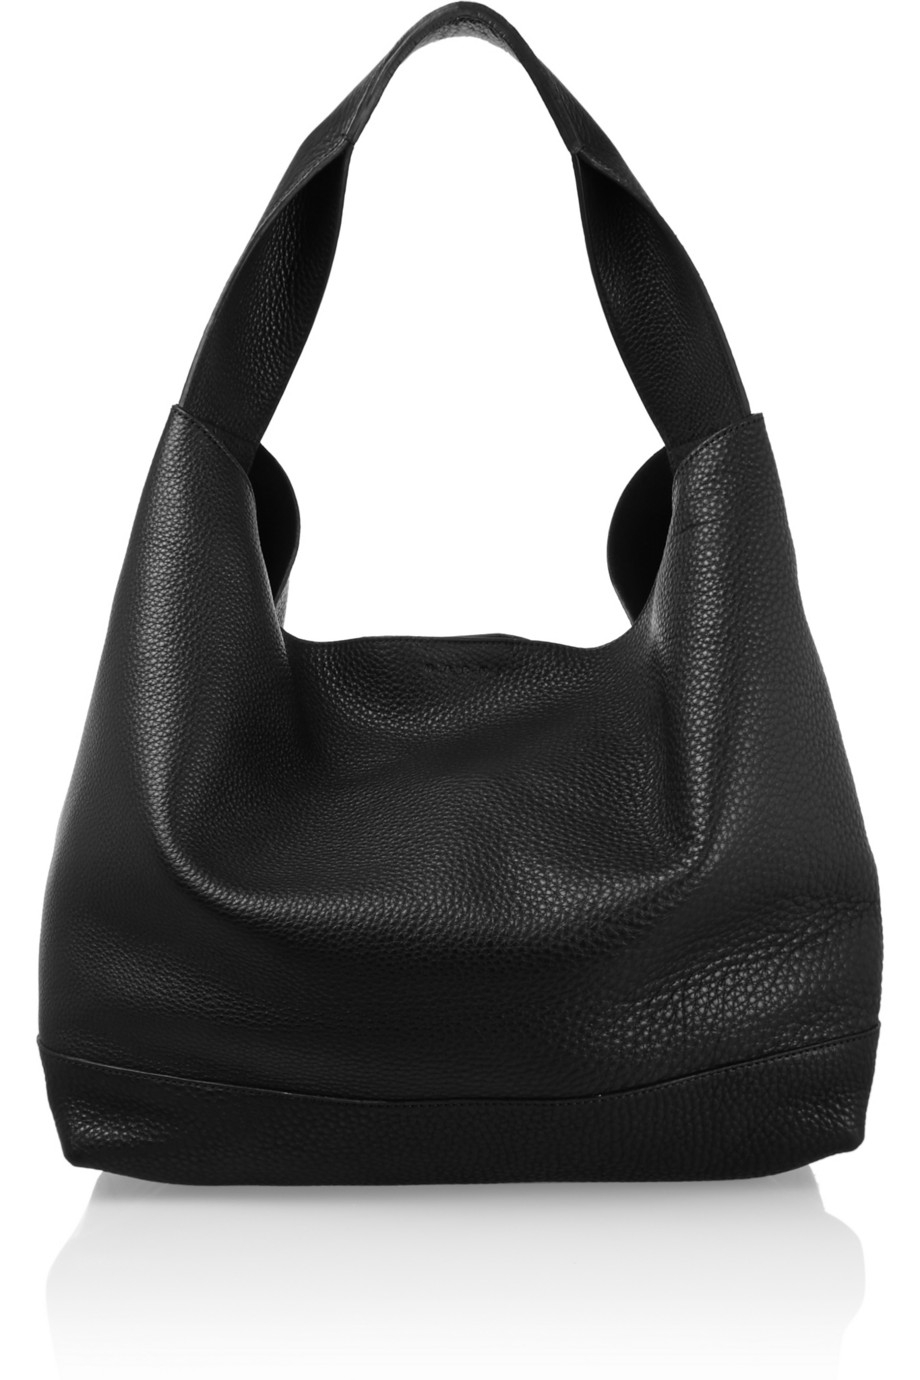 Marni Leather Hobo Bag | Paul Smith